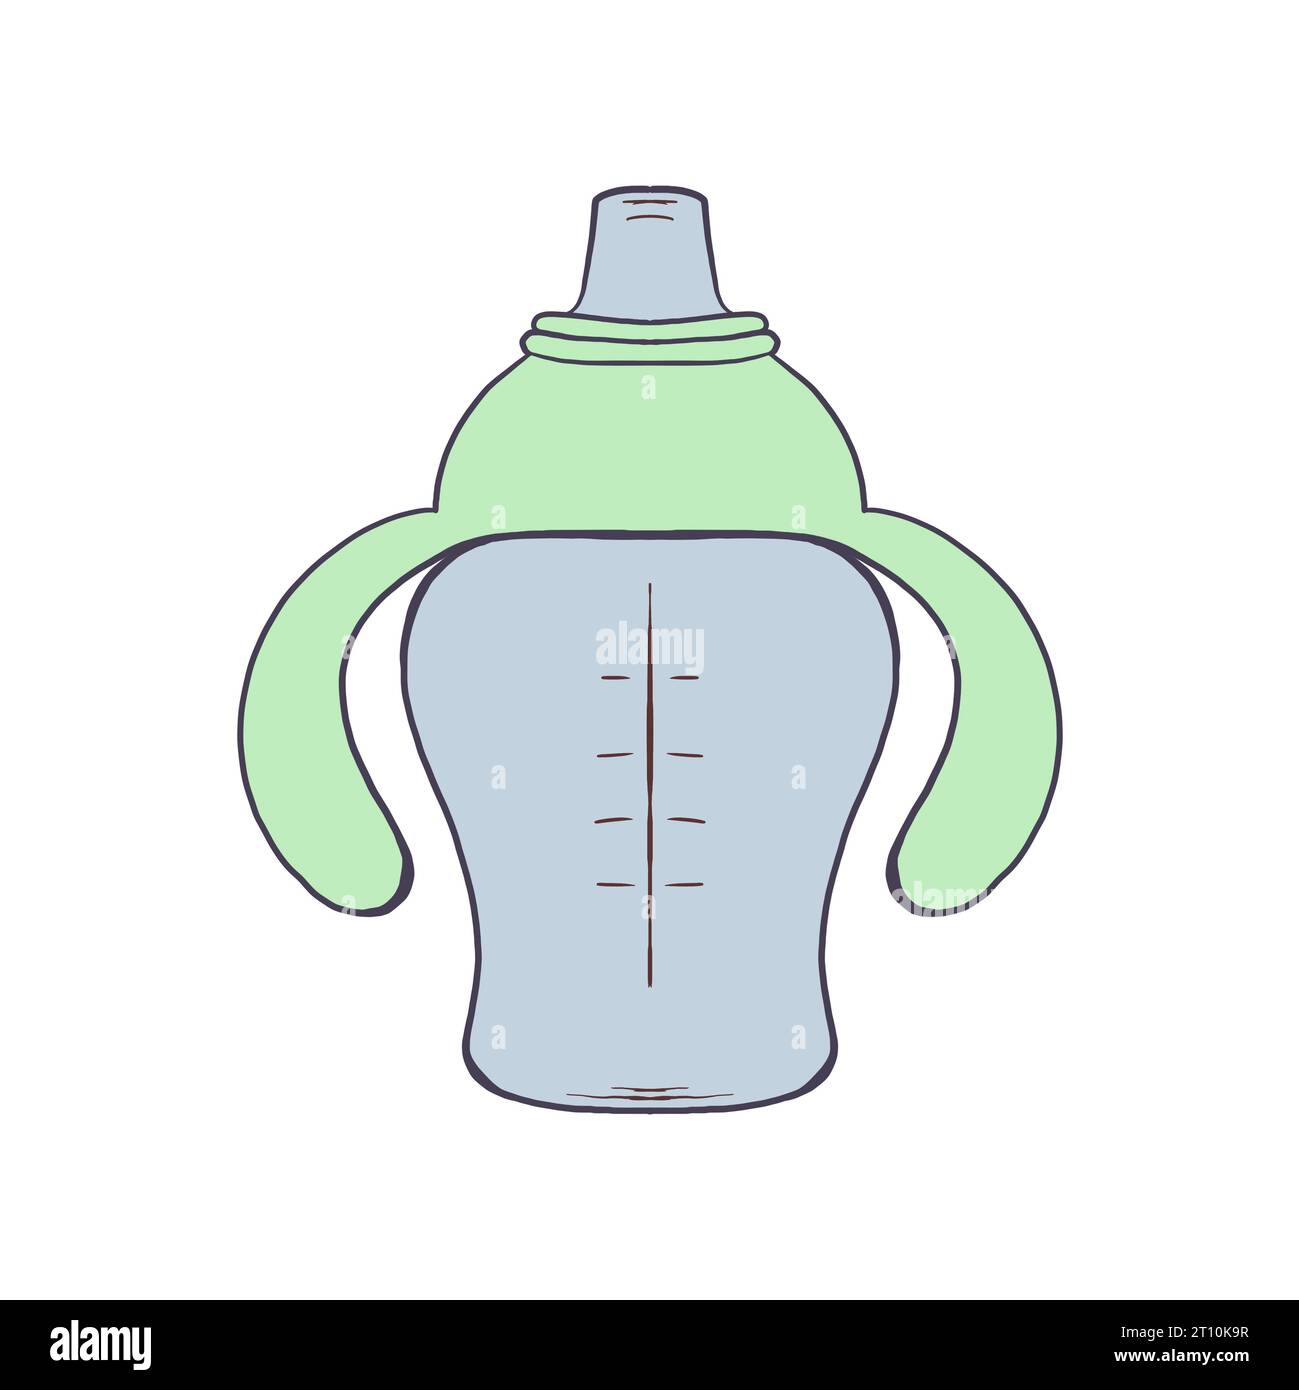 https://c8.alamy.com/comp/2T10K9R/accessory-for-baby-feeding-training-cup-hand-drawn-illustration-2T10K9R.jpg